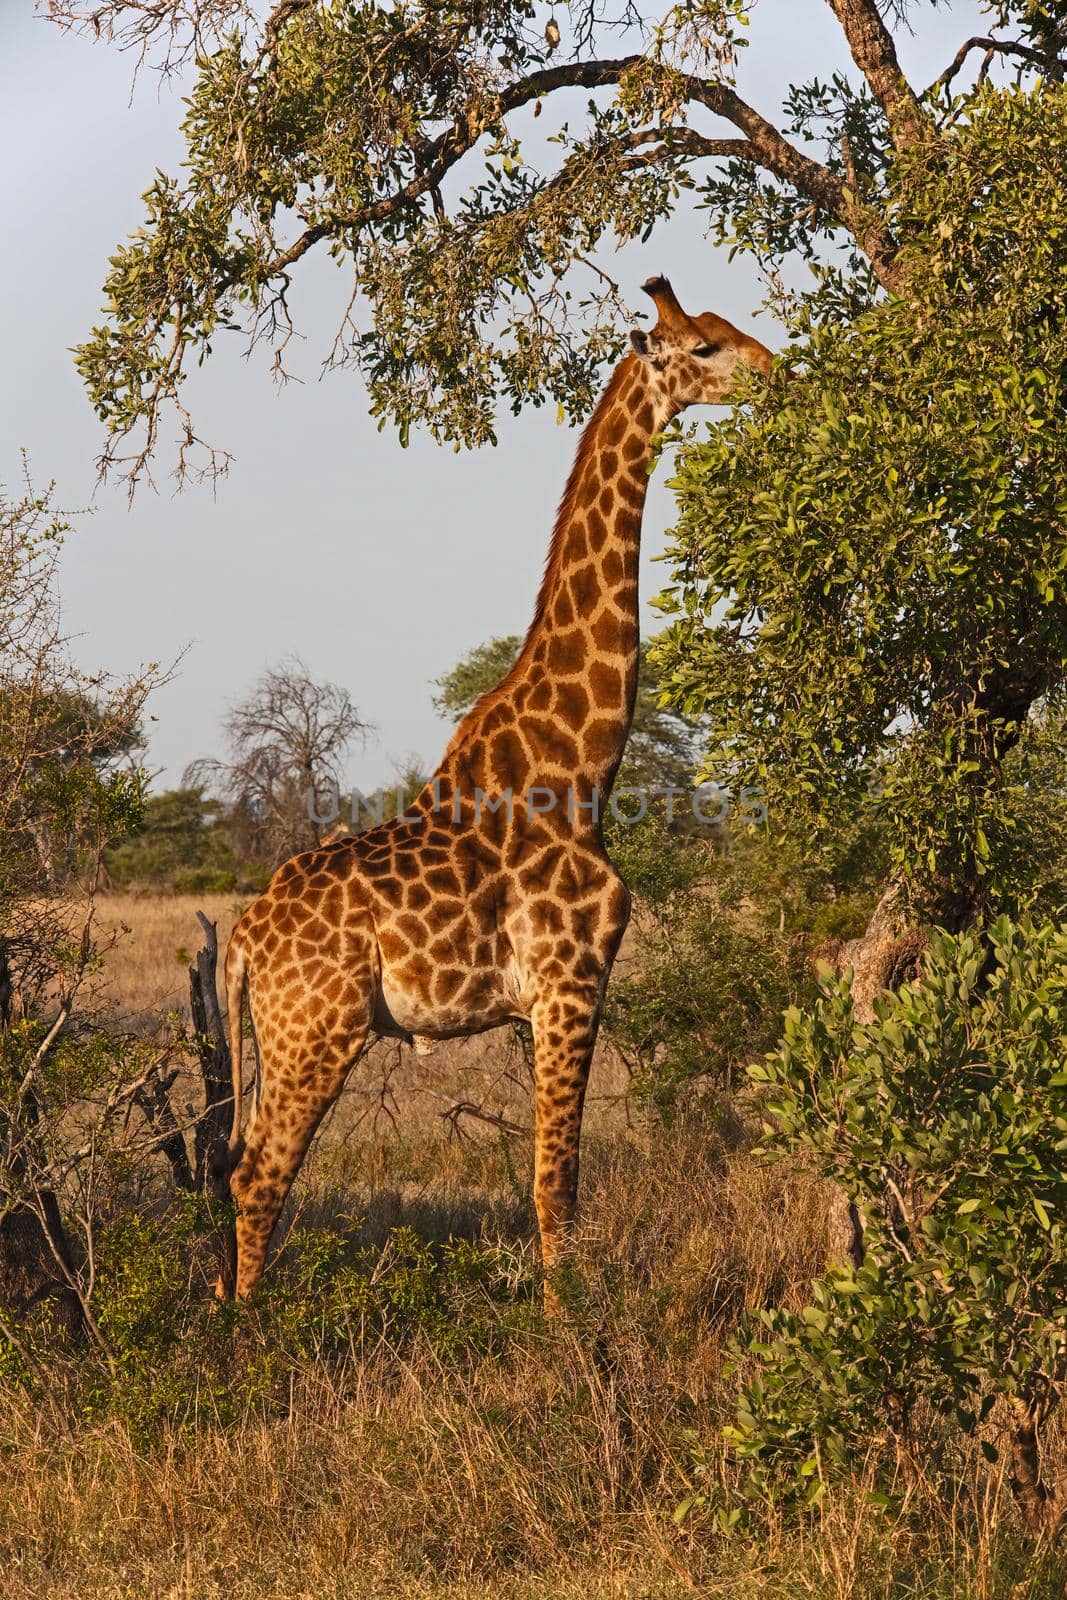 Bull Giraffe giraffa camelopardalis 13646 by kobus_peche